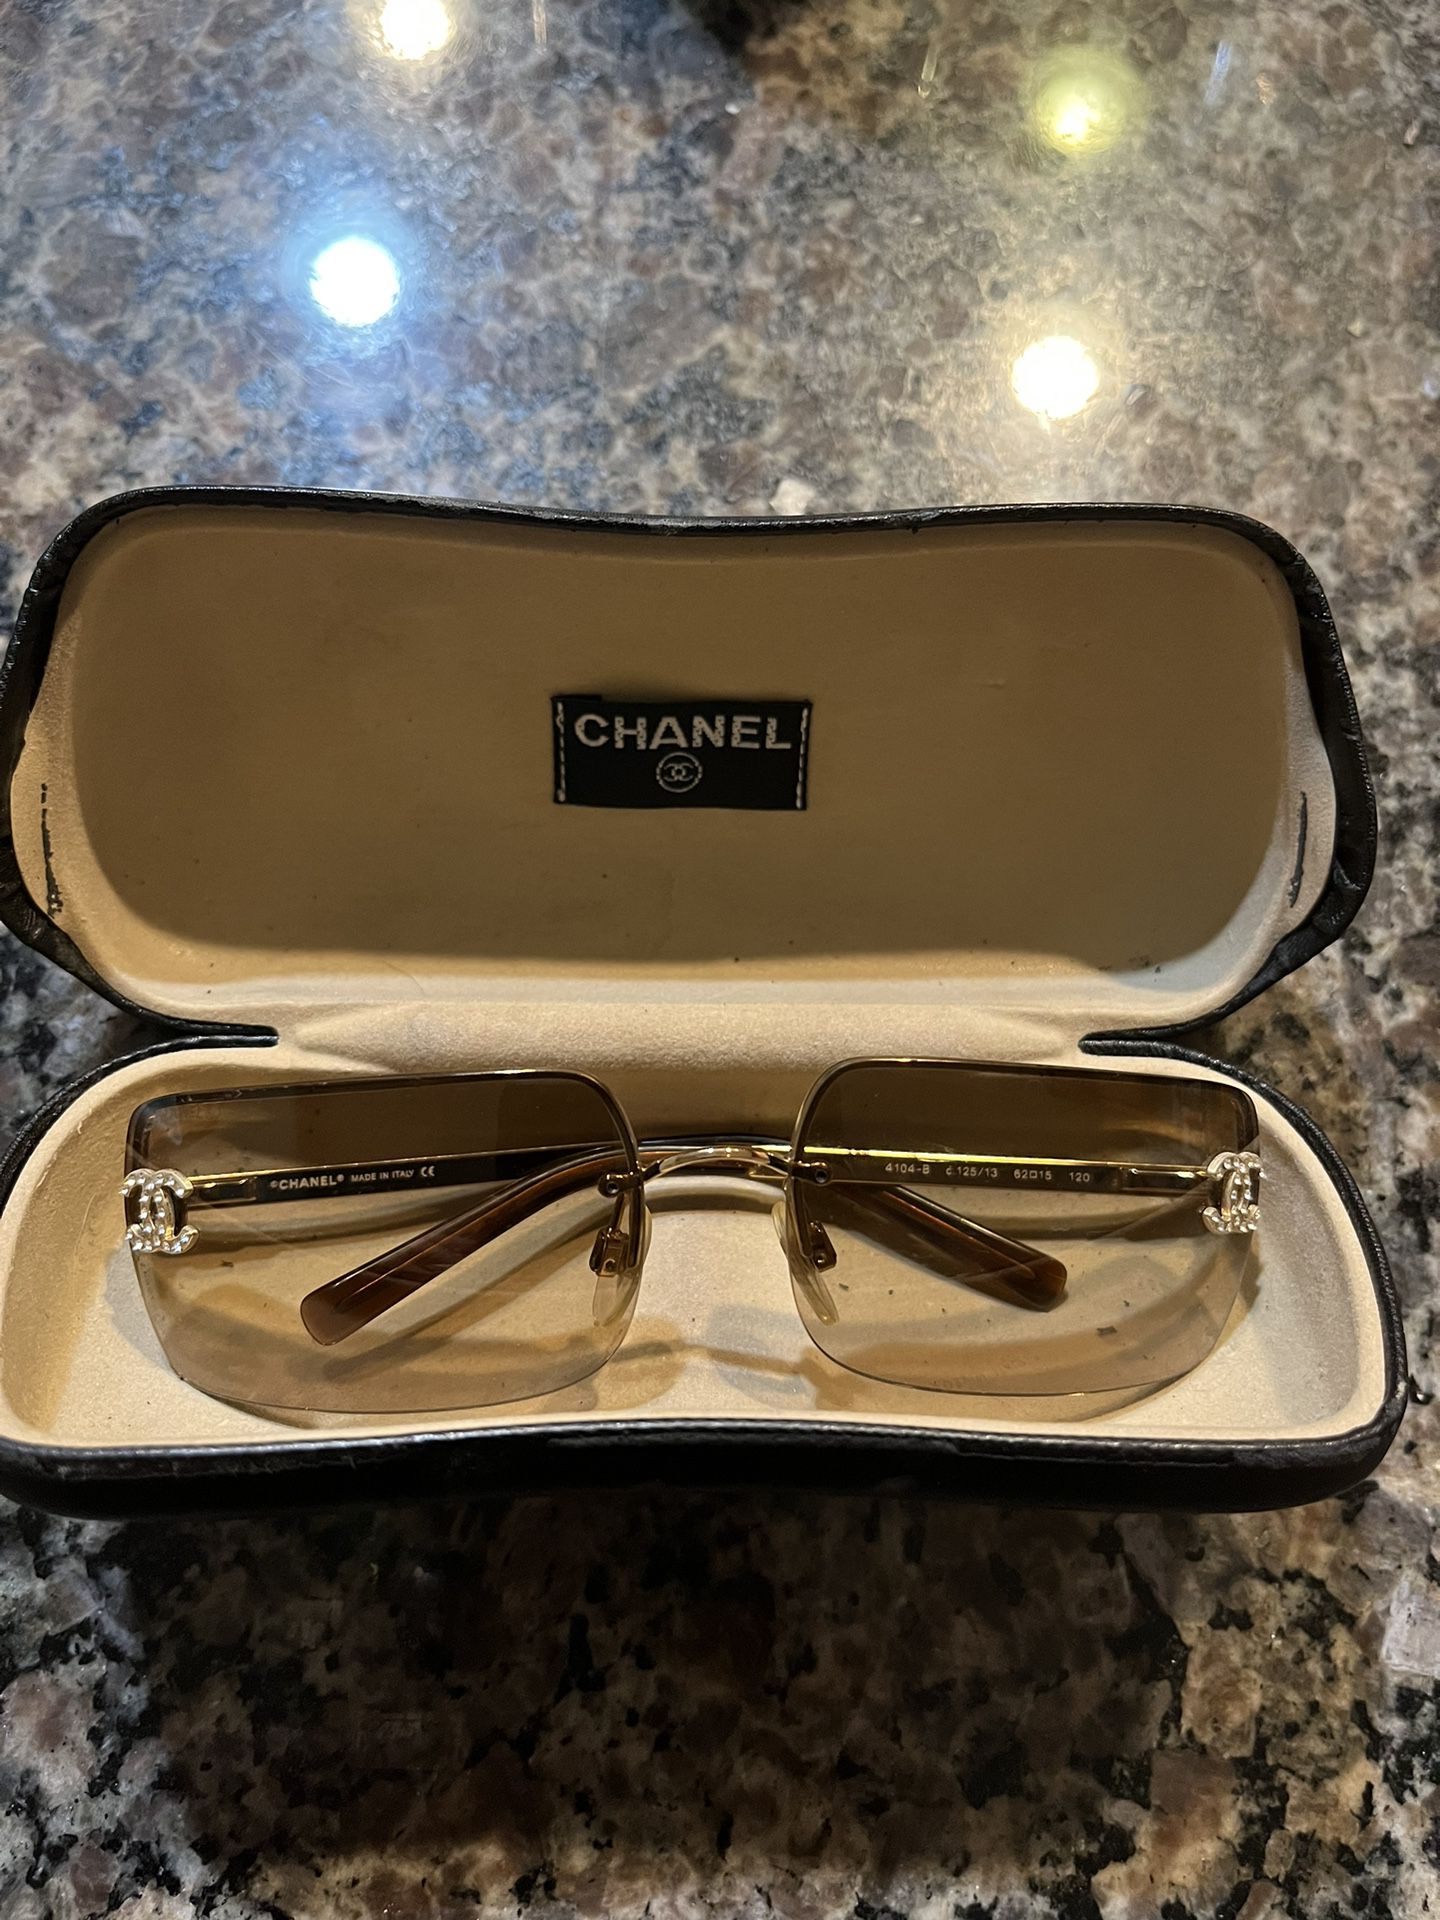 Chanel Sunglasses for Sale in Tustin, CA - OfferUp